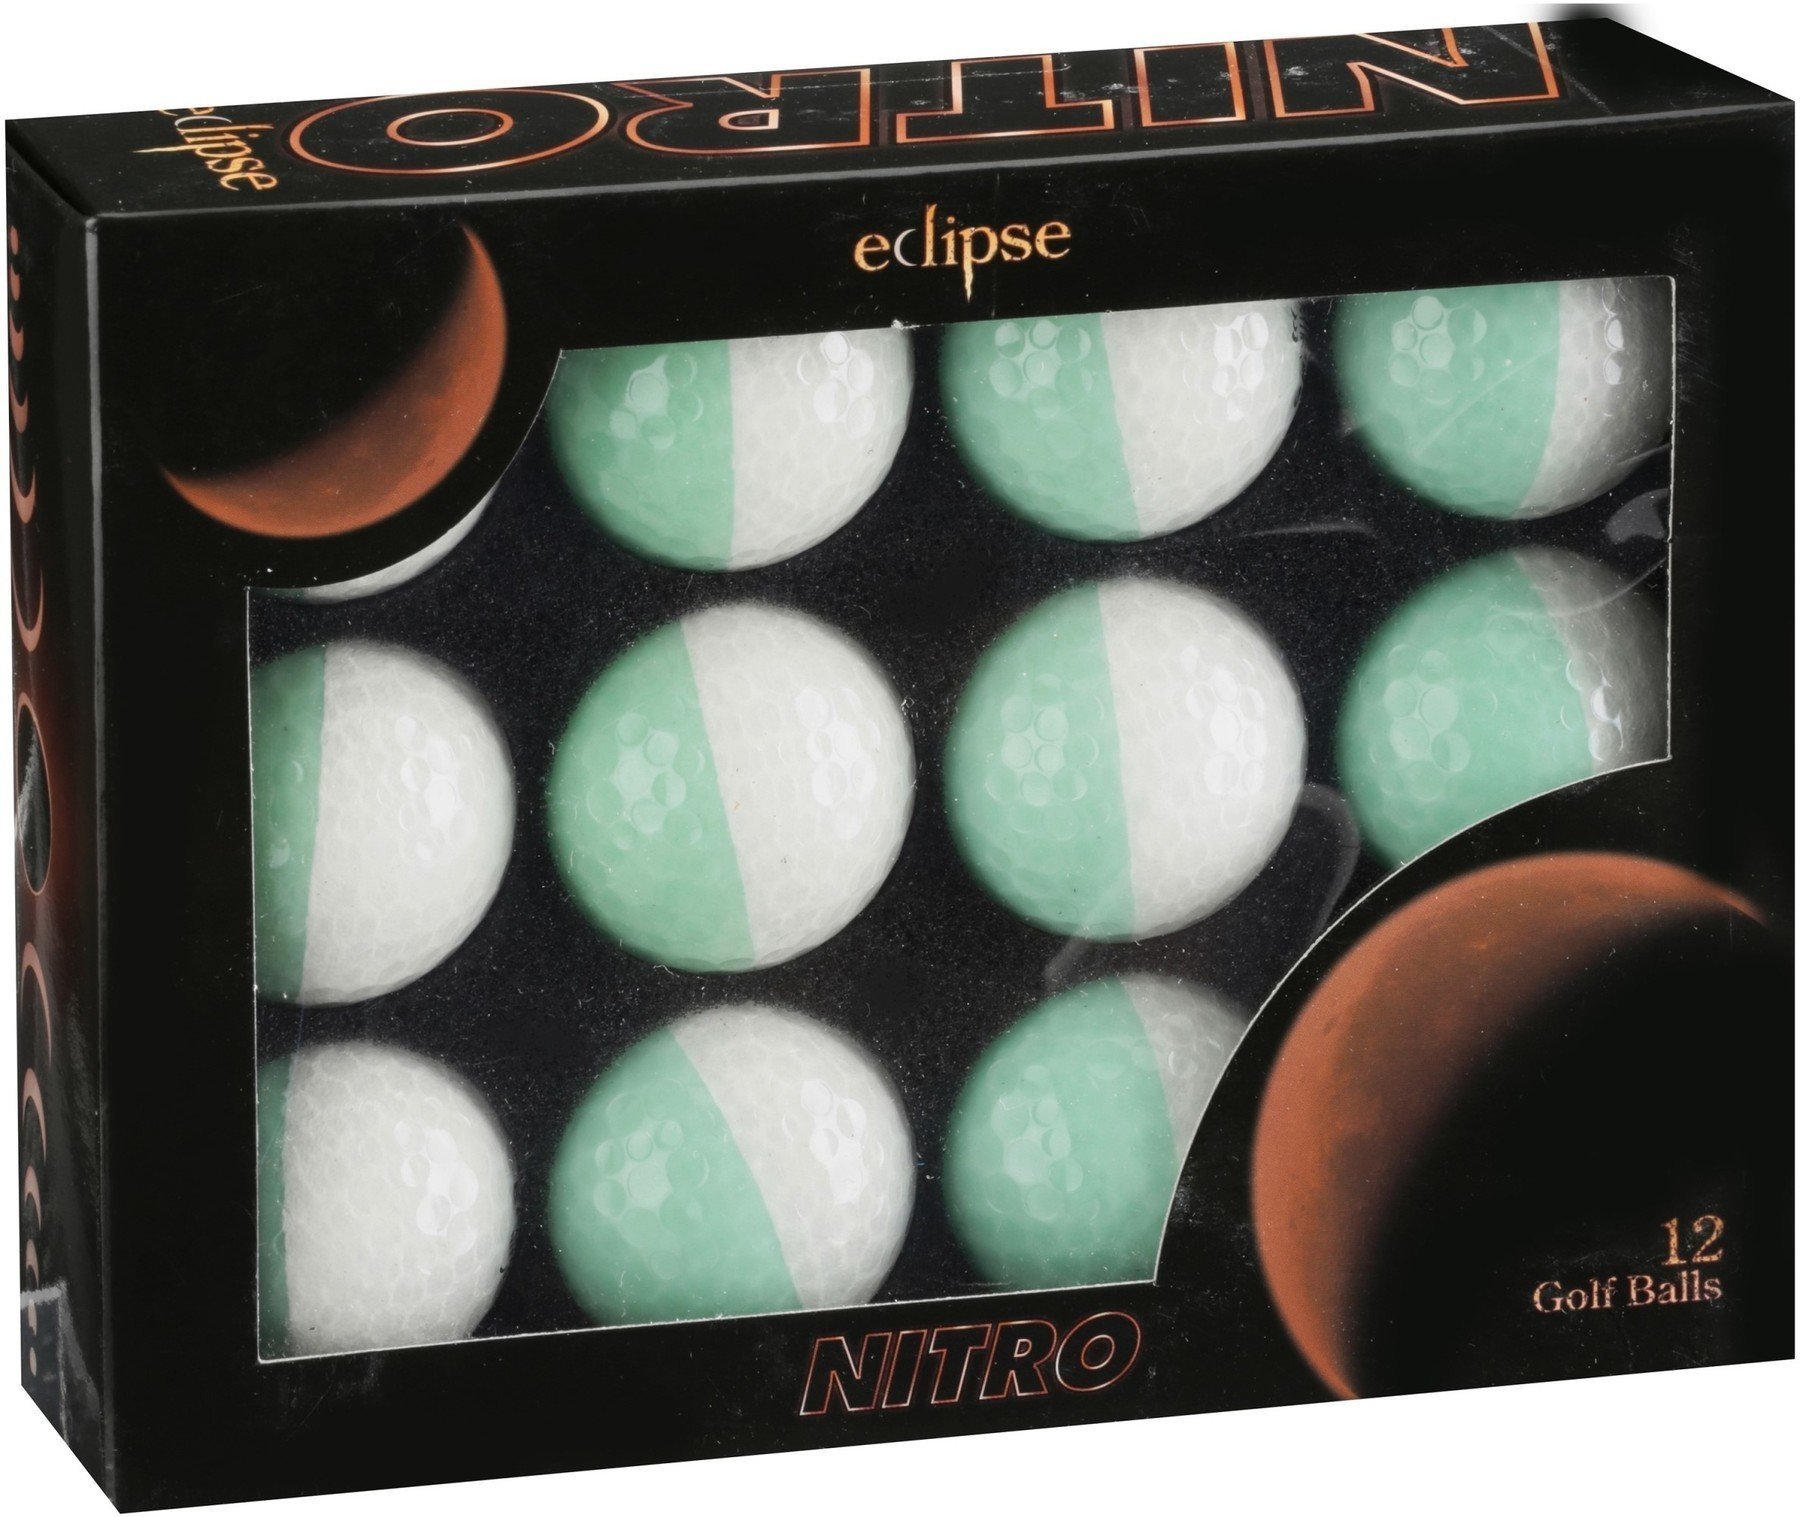 Golfball Nitro Eclipse White/Mint